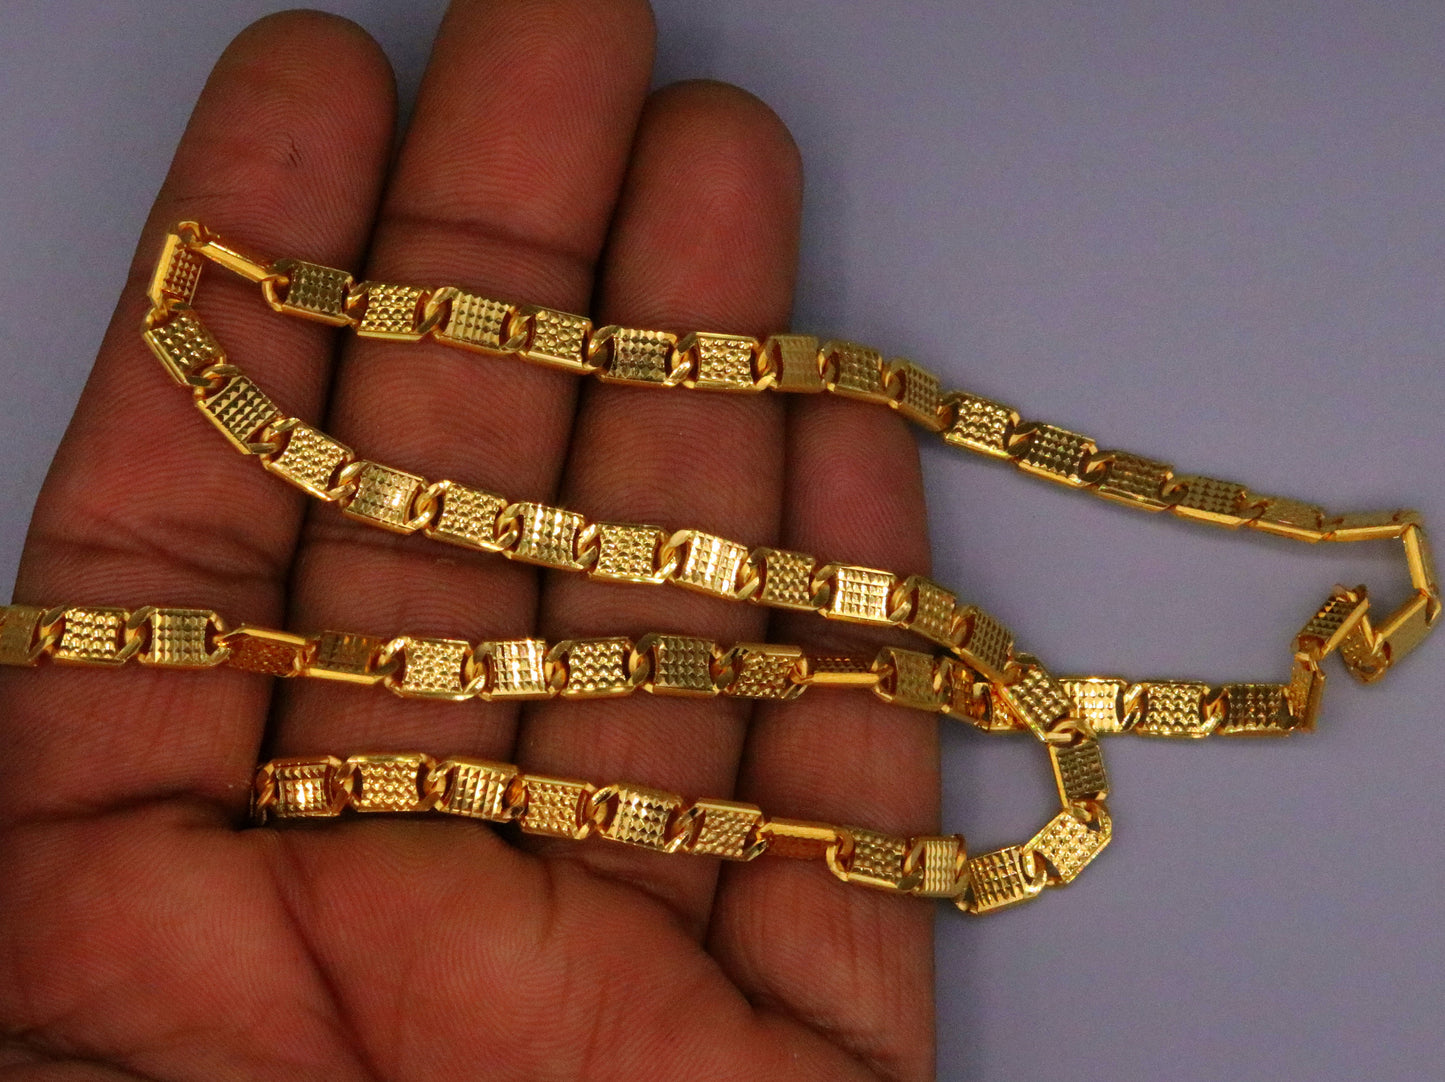 Vintage top class handmade diamond cut nawabi chain 22karat yellow gold 20 inches necklace chain gifting jewelry - TRIBAL ORNAMENTS